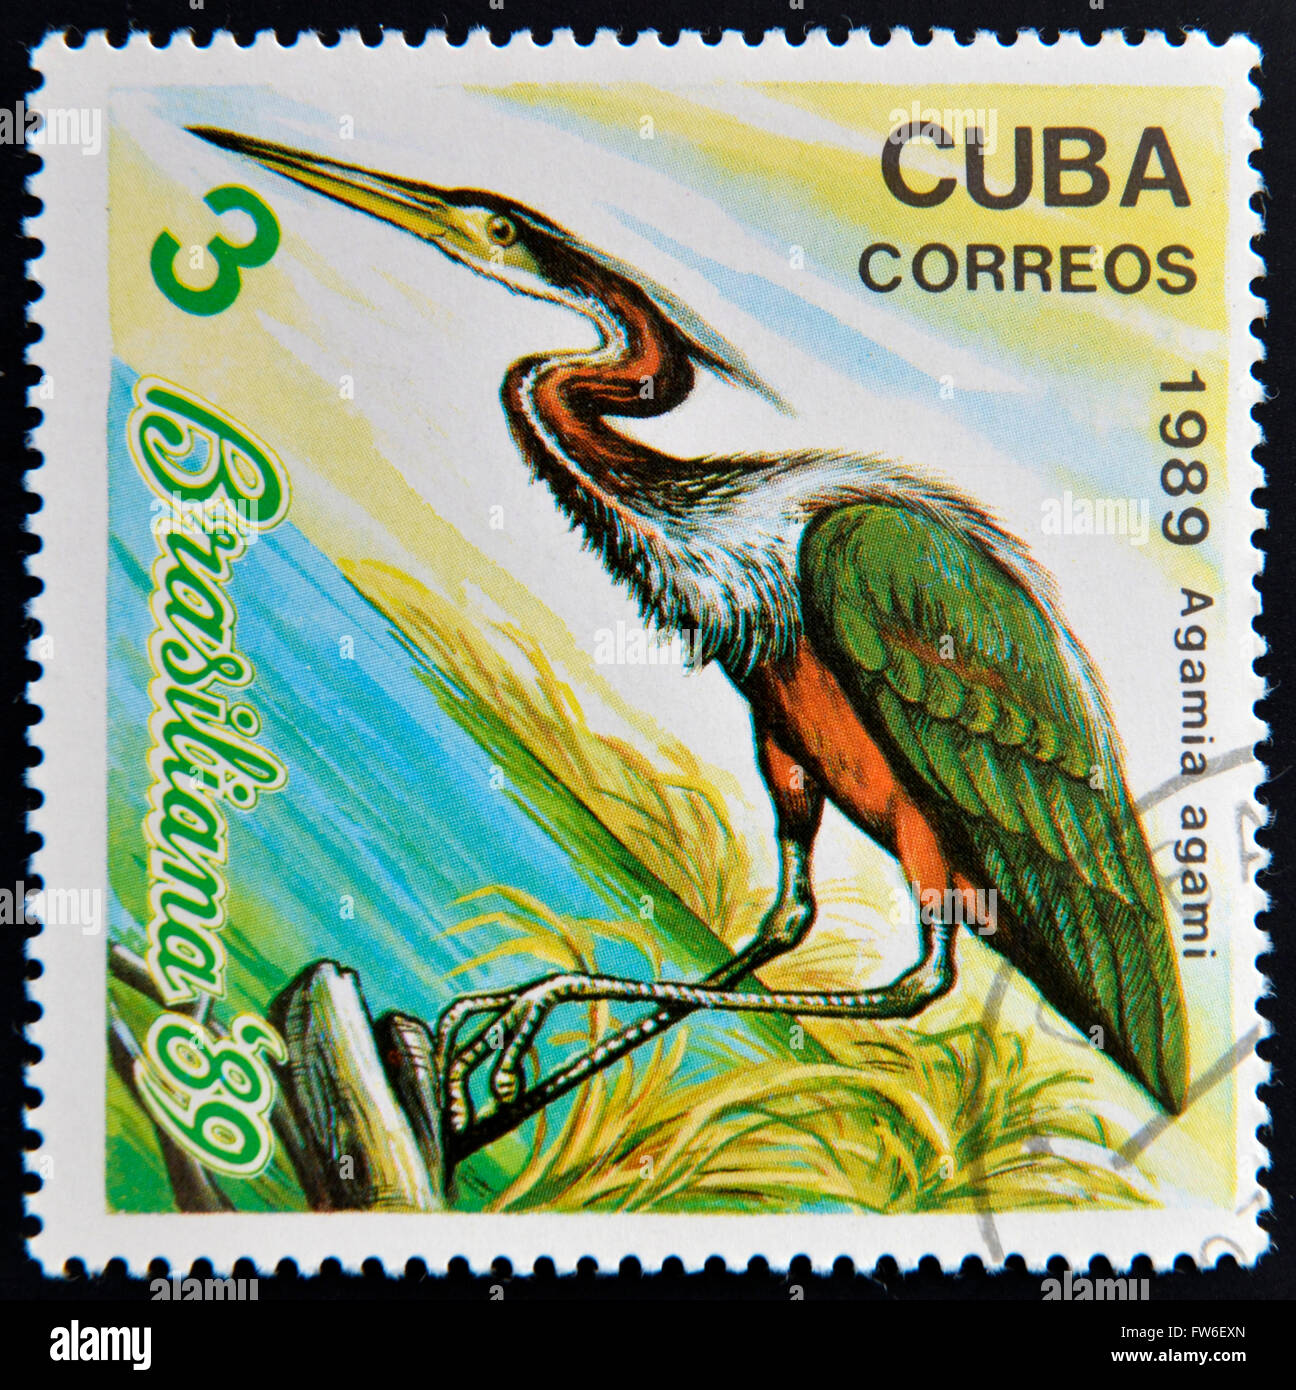 CUBA - circa 1989 : timbre imprimé dans la Cuba, montre l'oiseau exotique, agamia agami, vers 1989 Banque D'Images